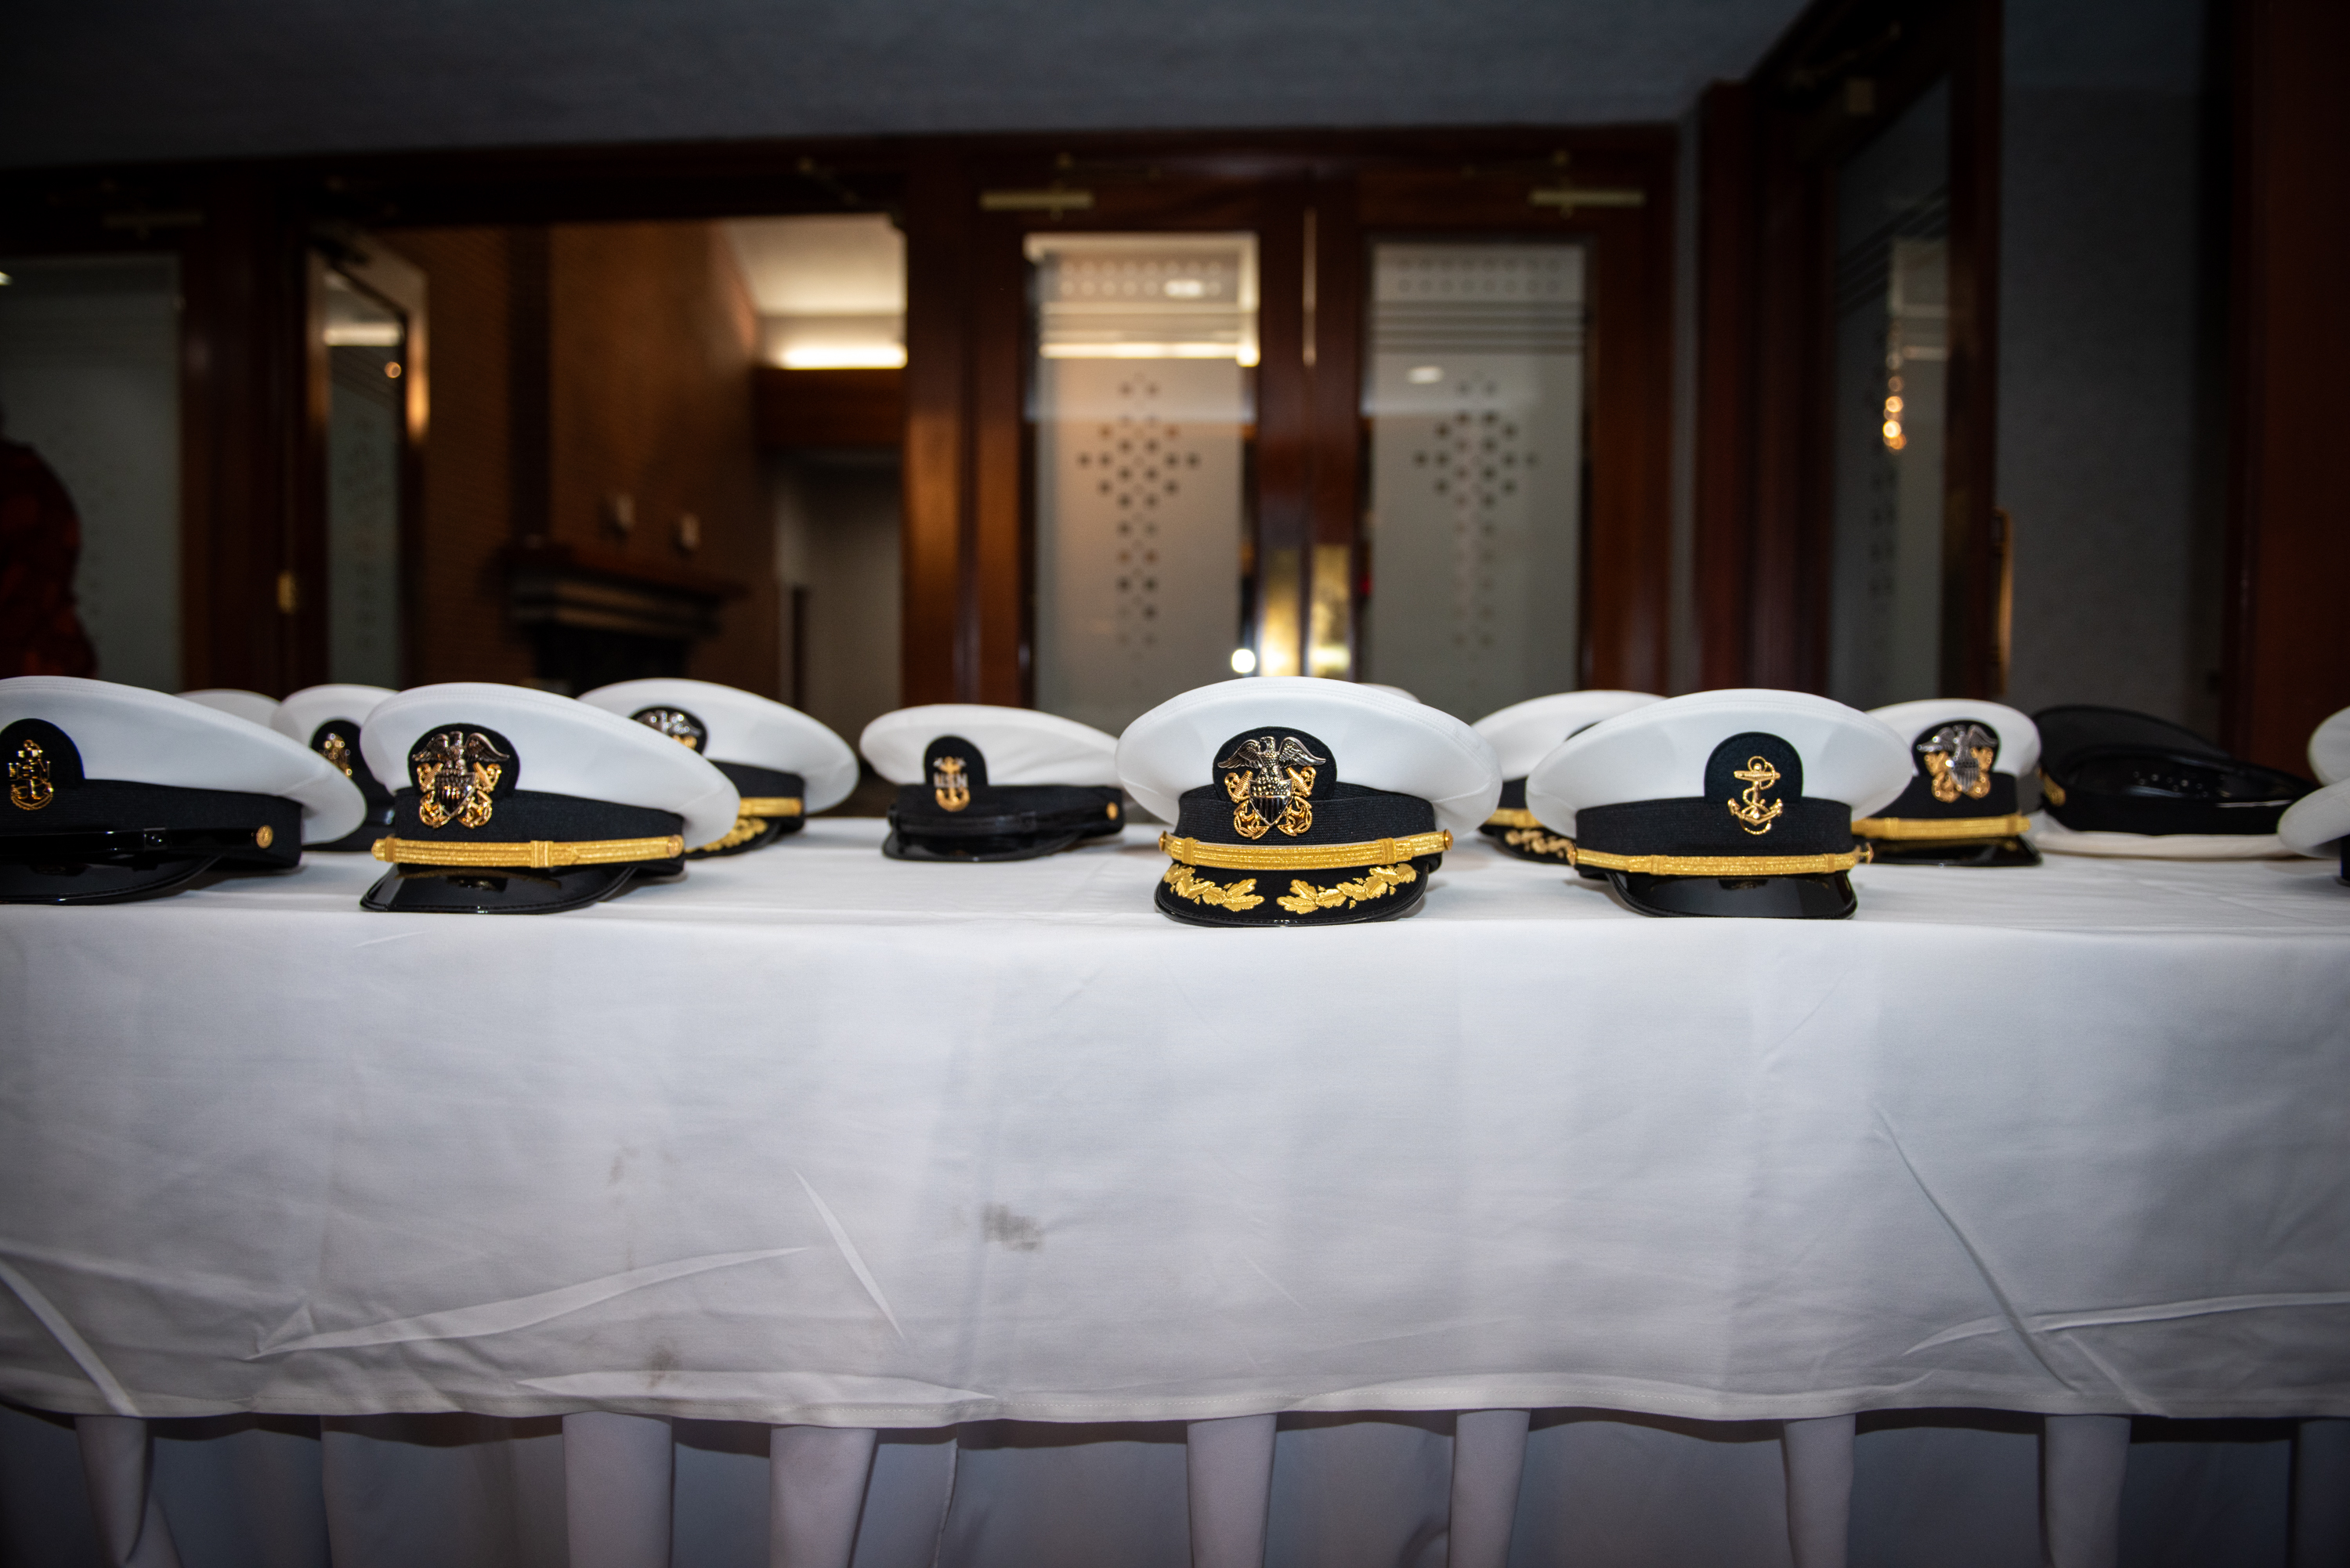 Navy hats